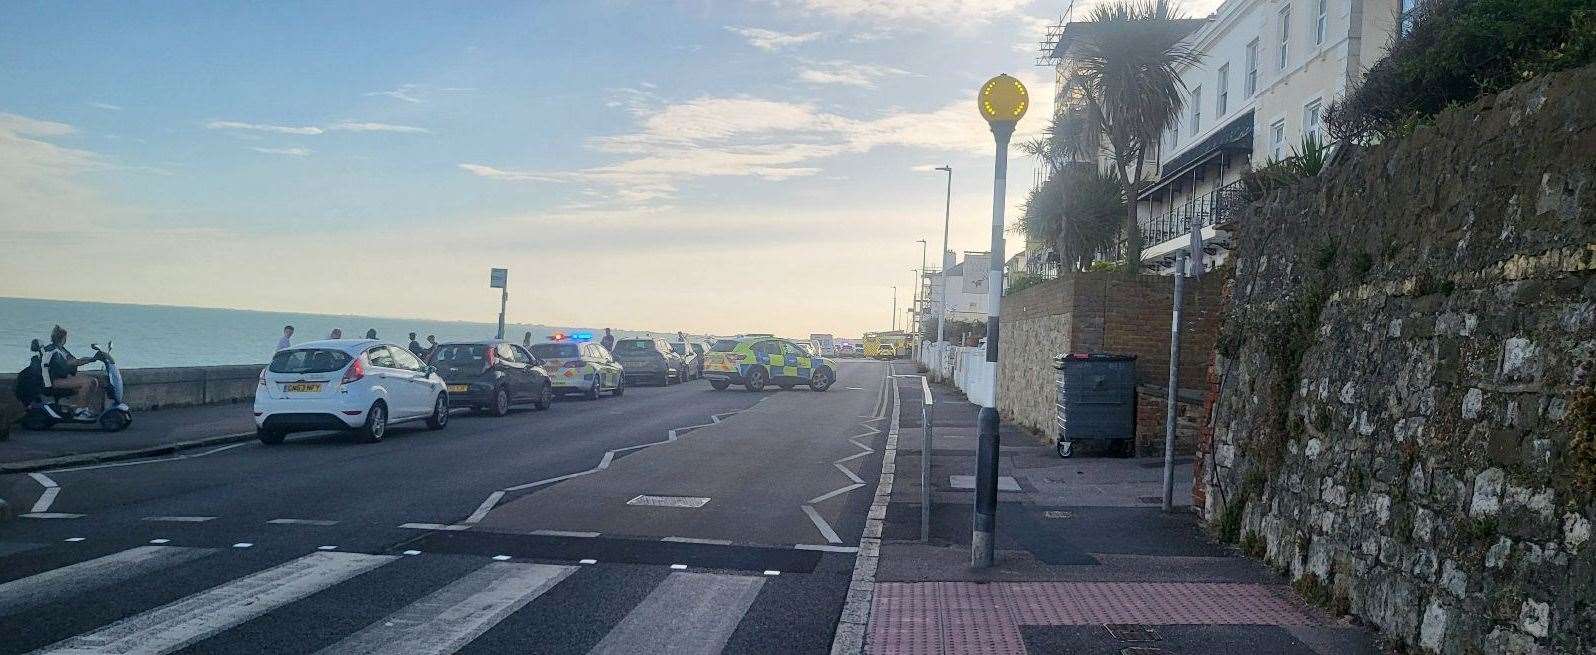 Sandgate Esplanade has been closed after a crash